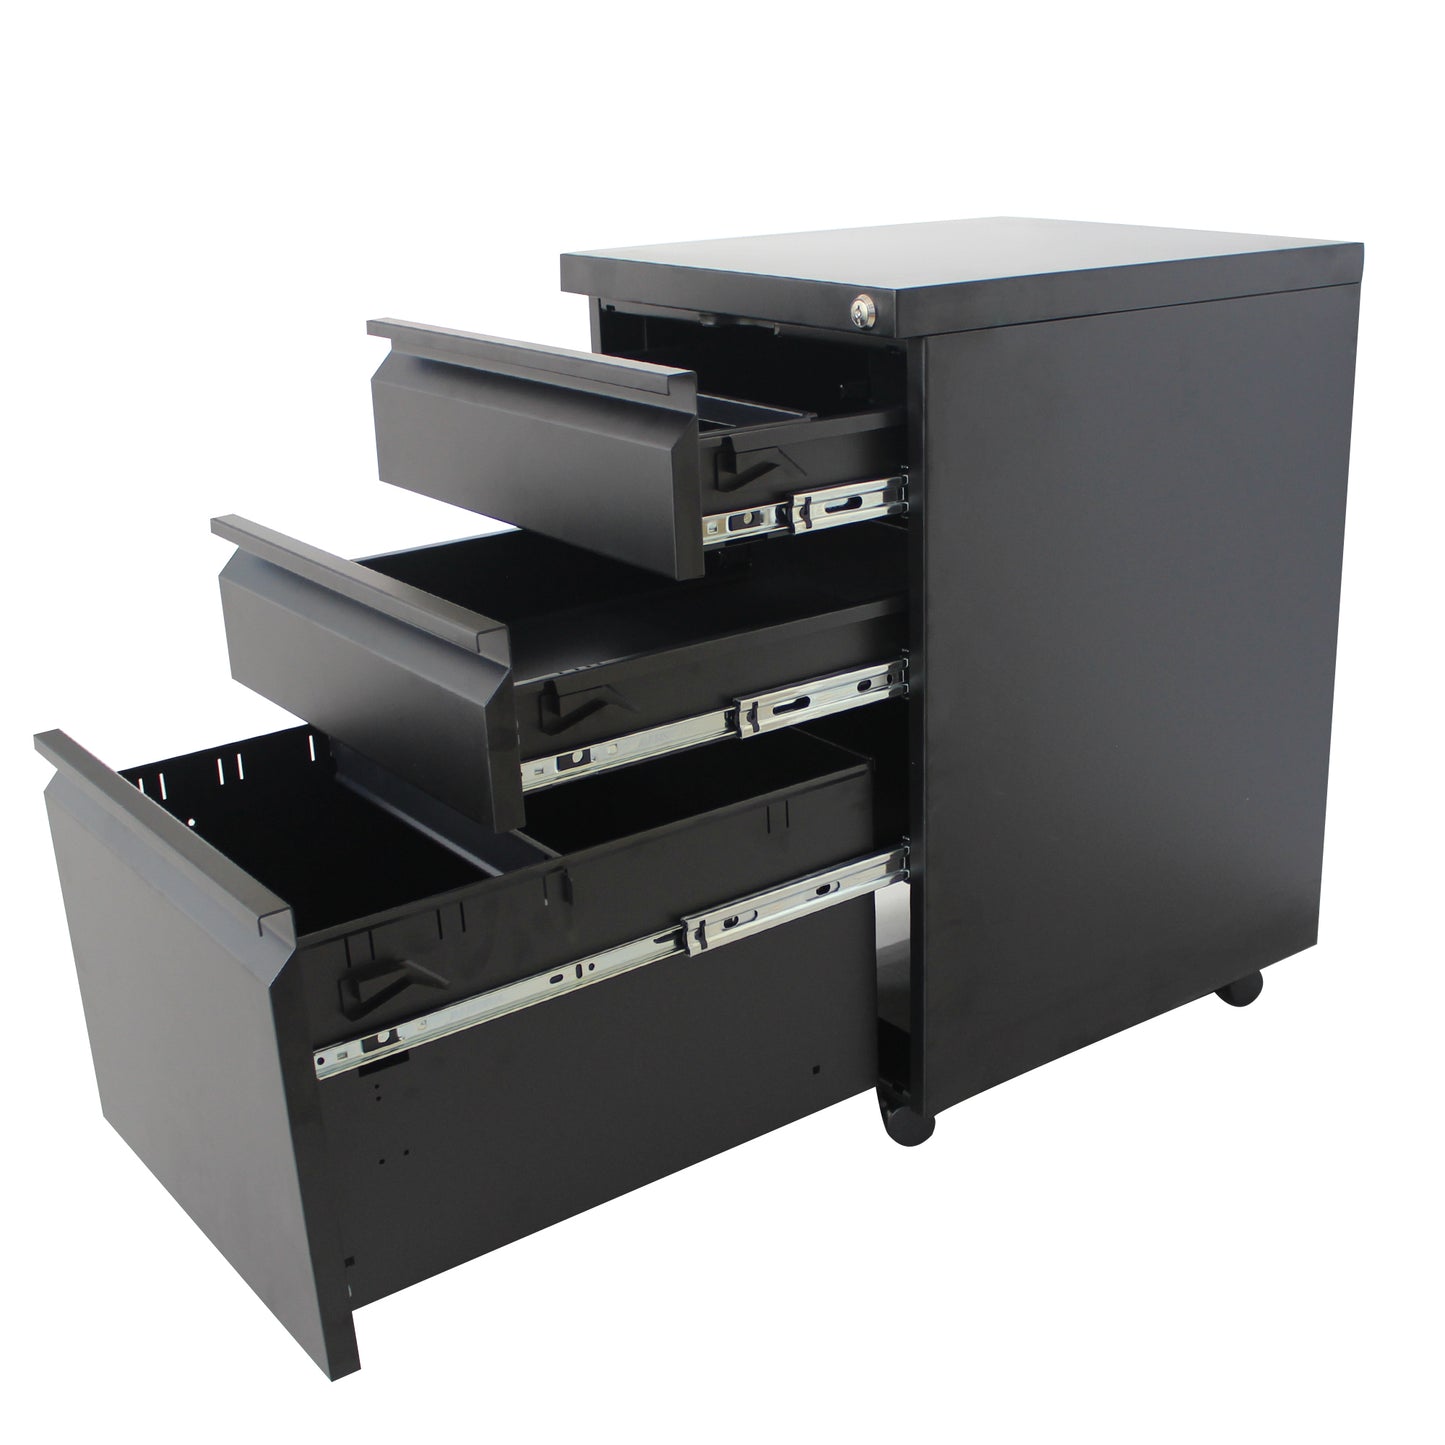 3 Drawer File Cabinet with Lock, Steel Mobile Filing Cabinet on Anti-tilt Wheels, Rolling Locking Office Cabinets Under Desk for Legal/Letter Size